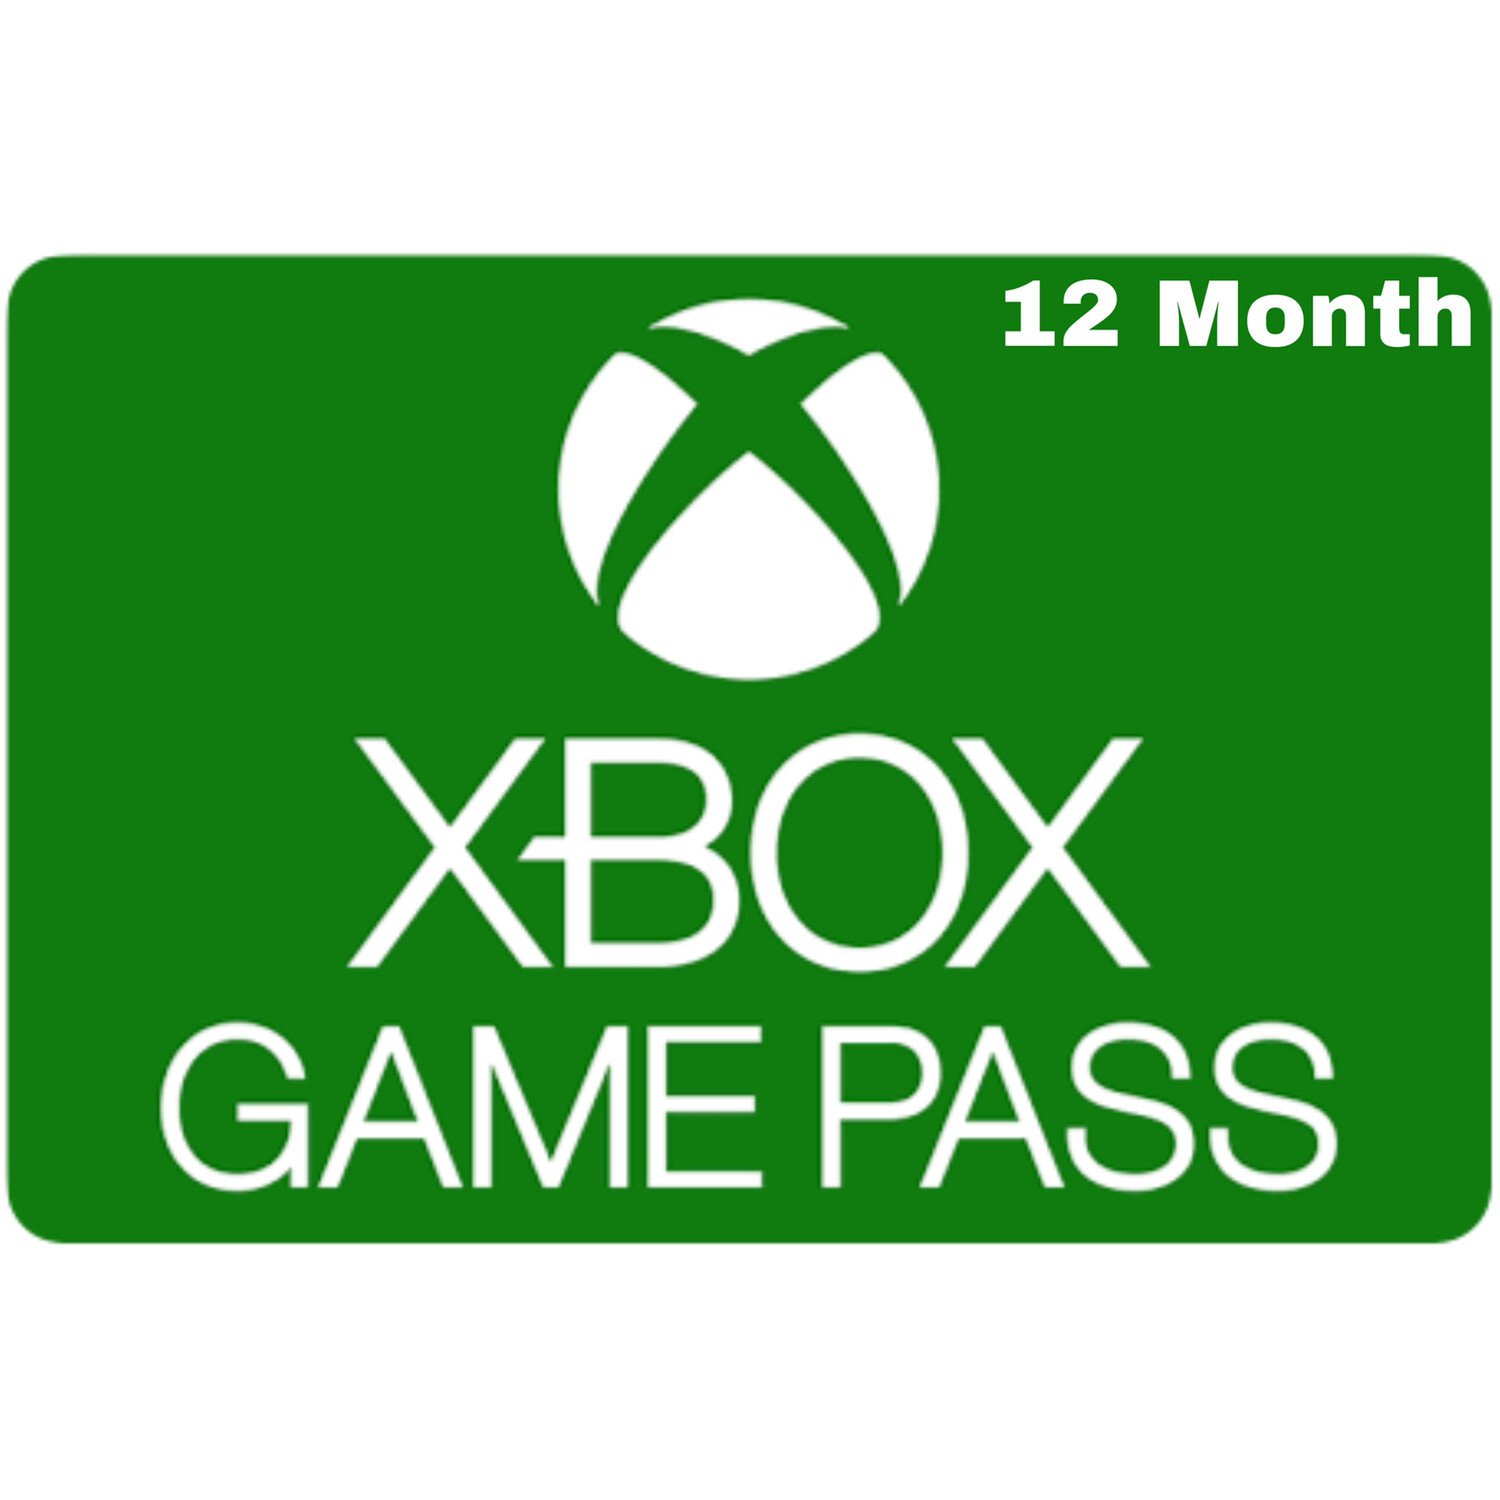 xbox game pass 12 month pass